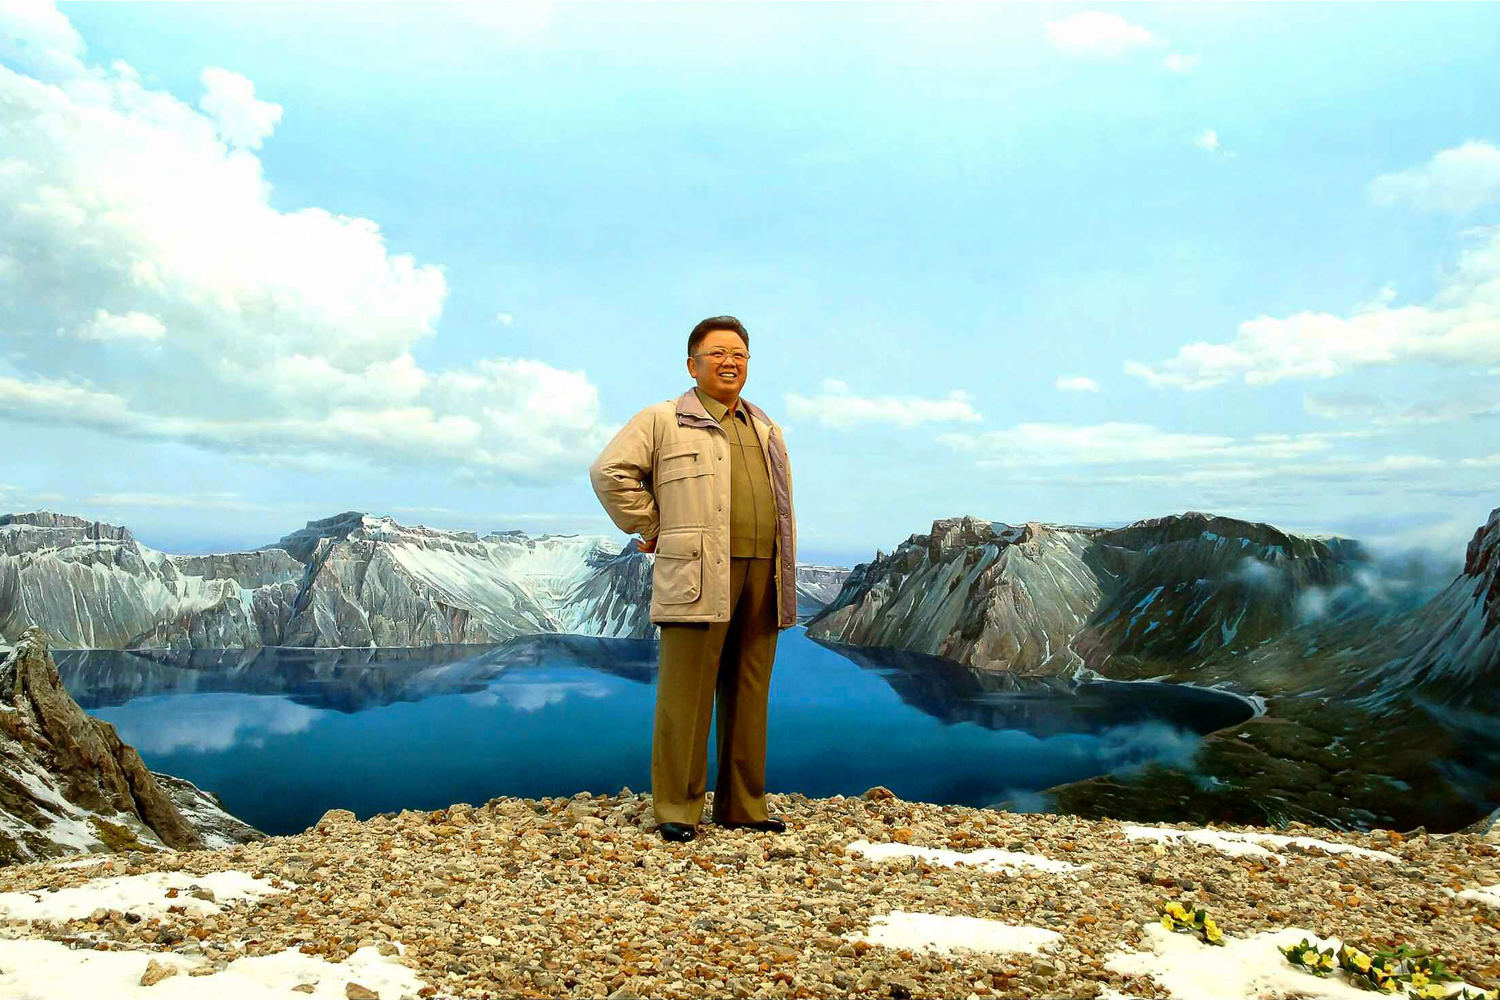 wax statue of former North Korean leader Kim Jong-il